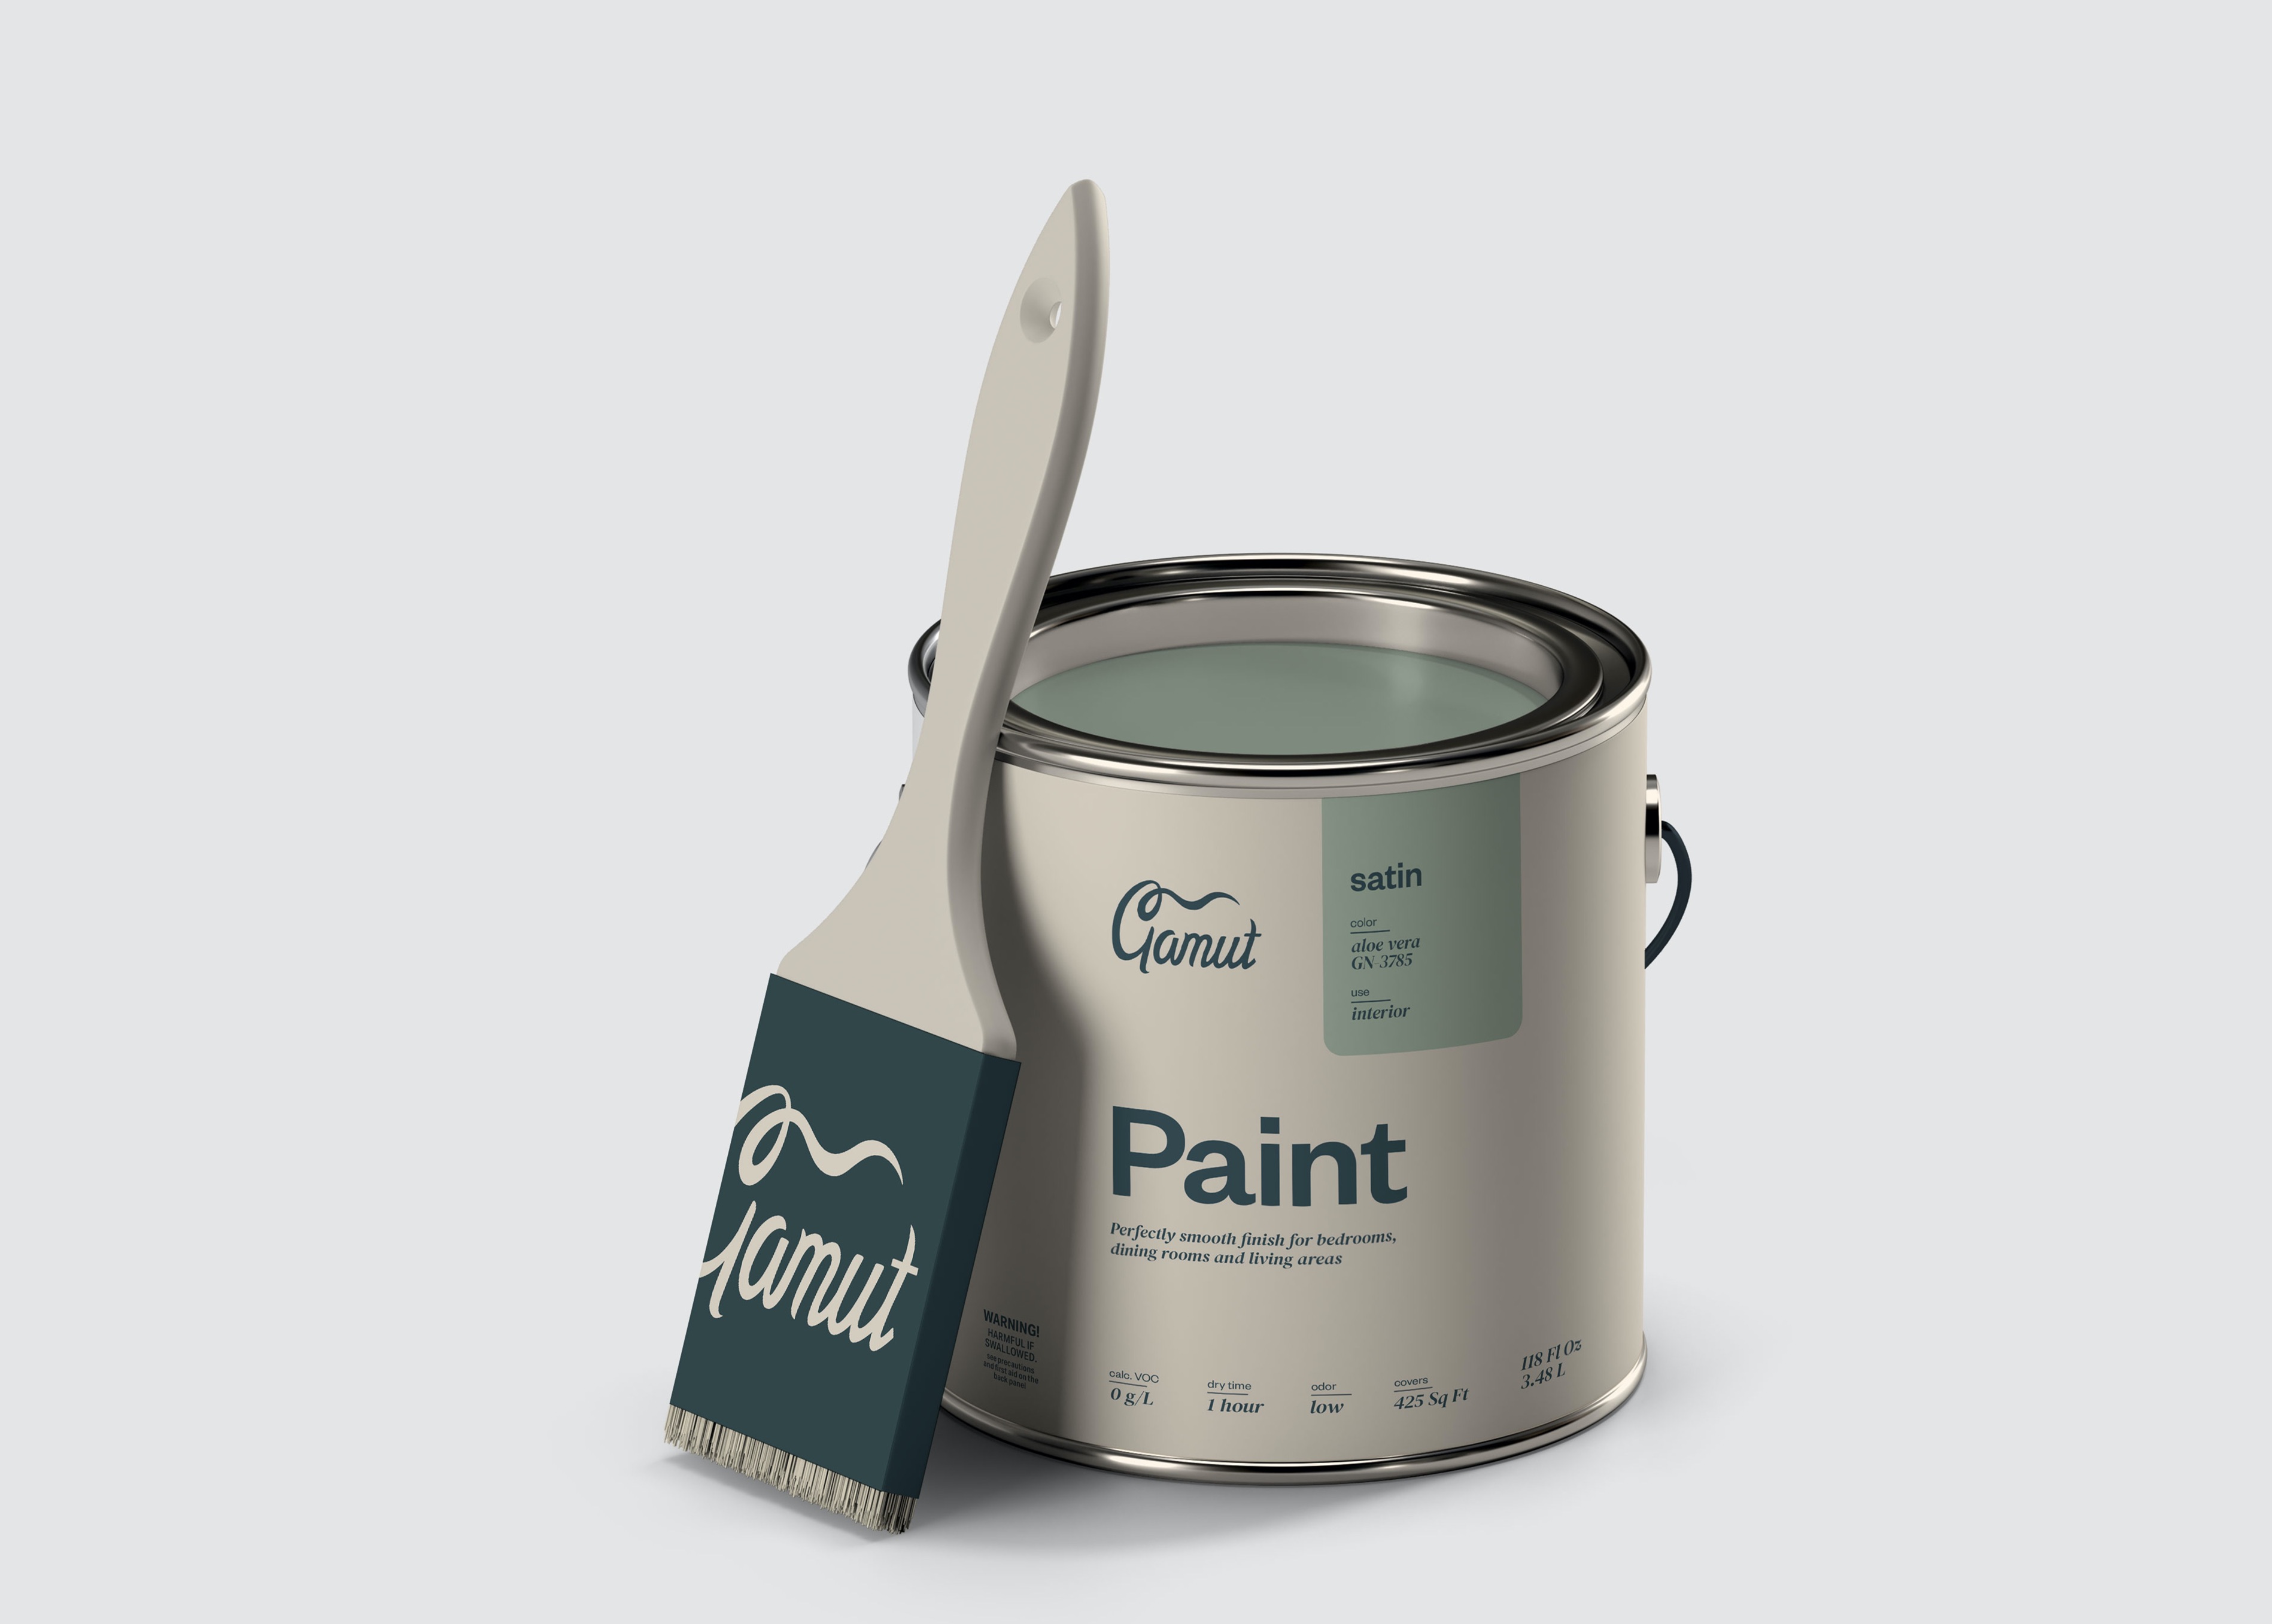 Gamut Premium Paint Branding and Packaging Design Concept